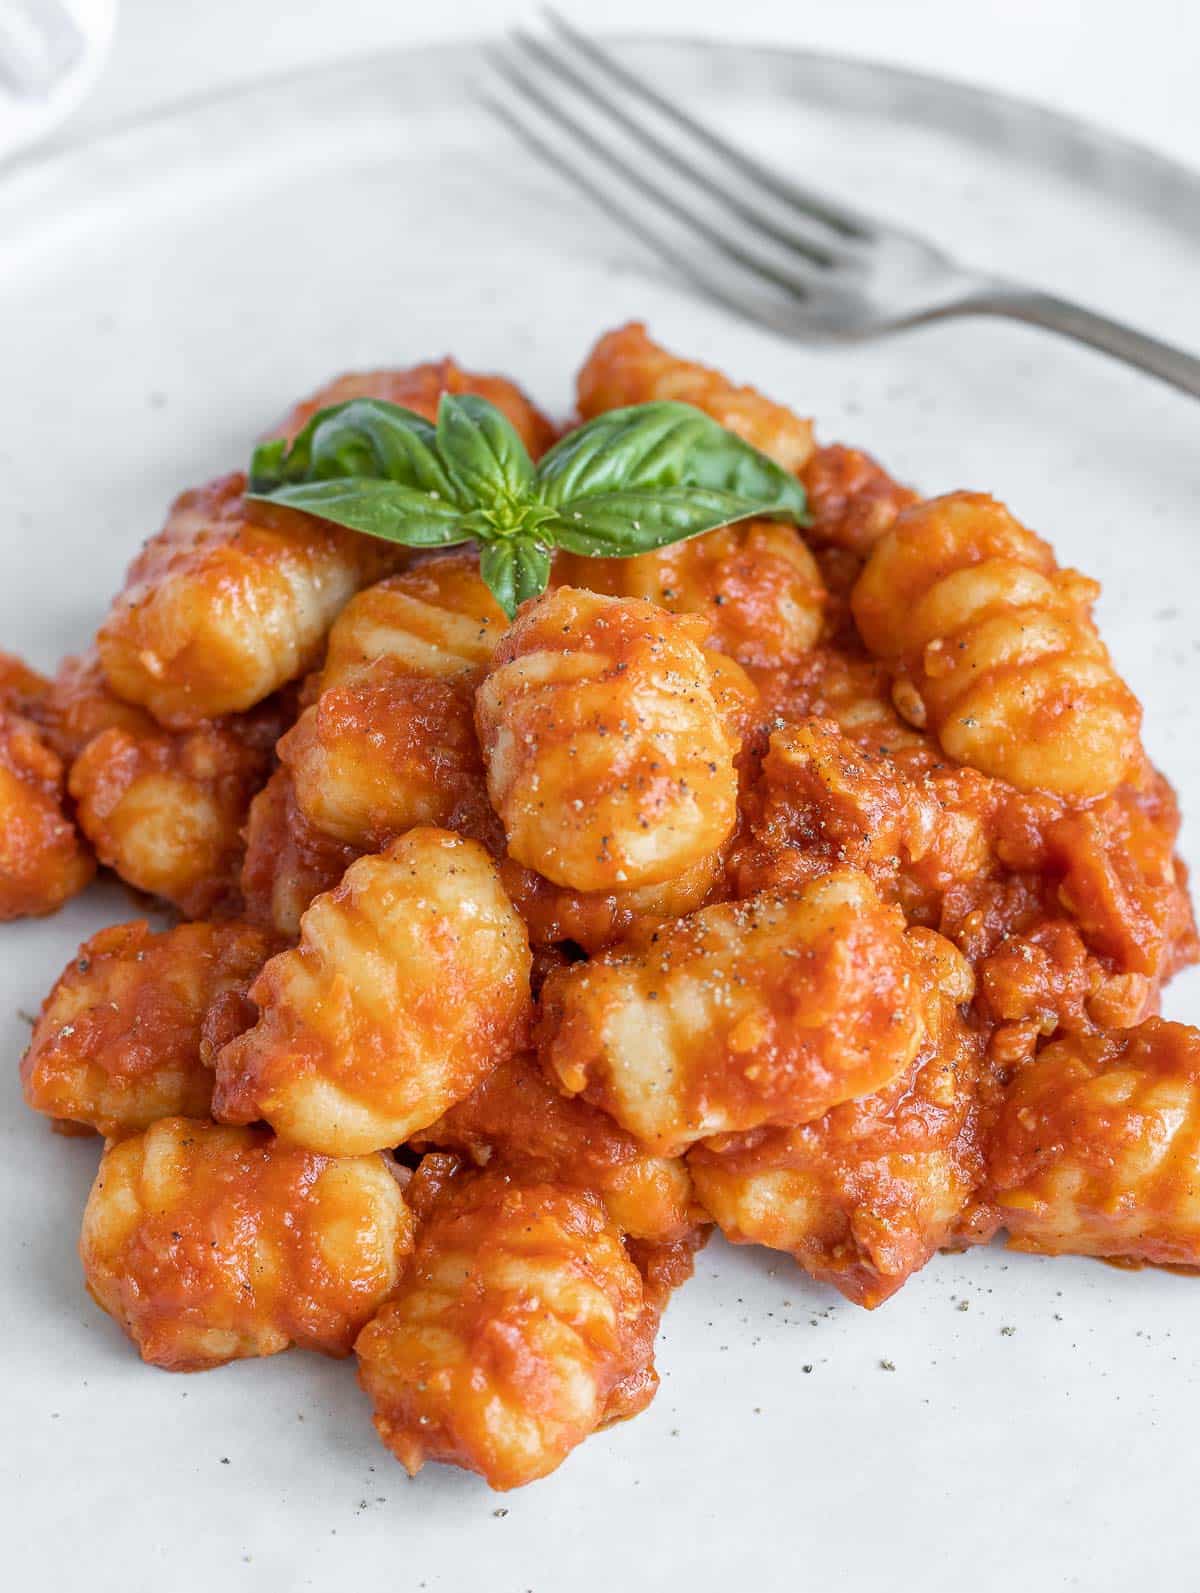 gnocchi with tomato sauce